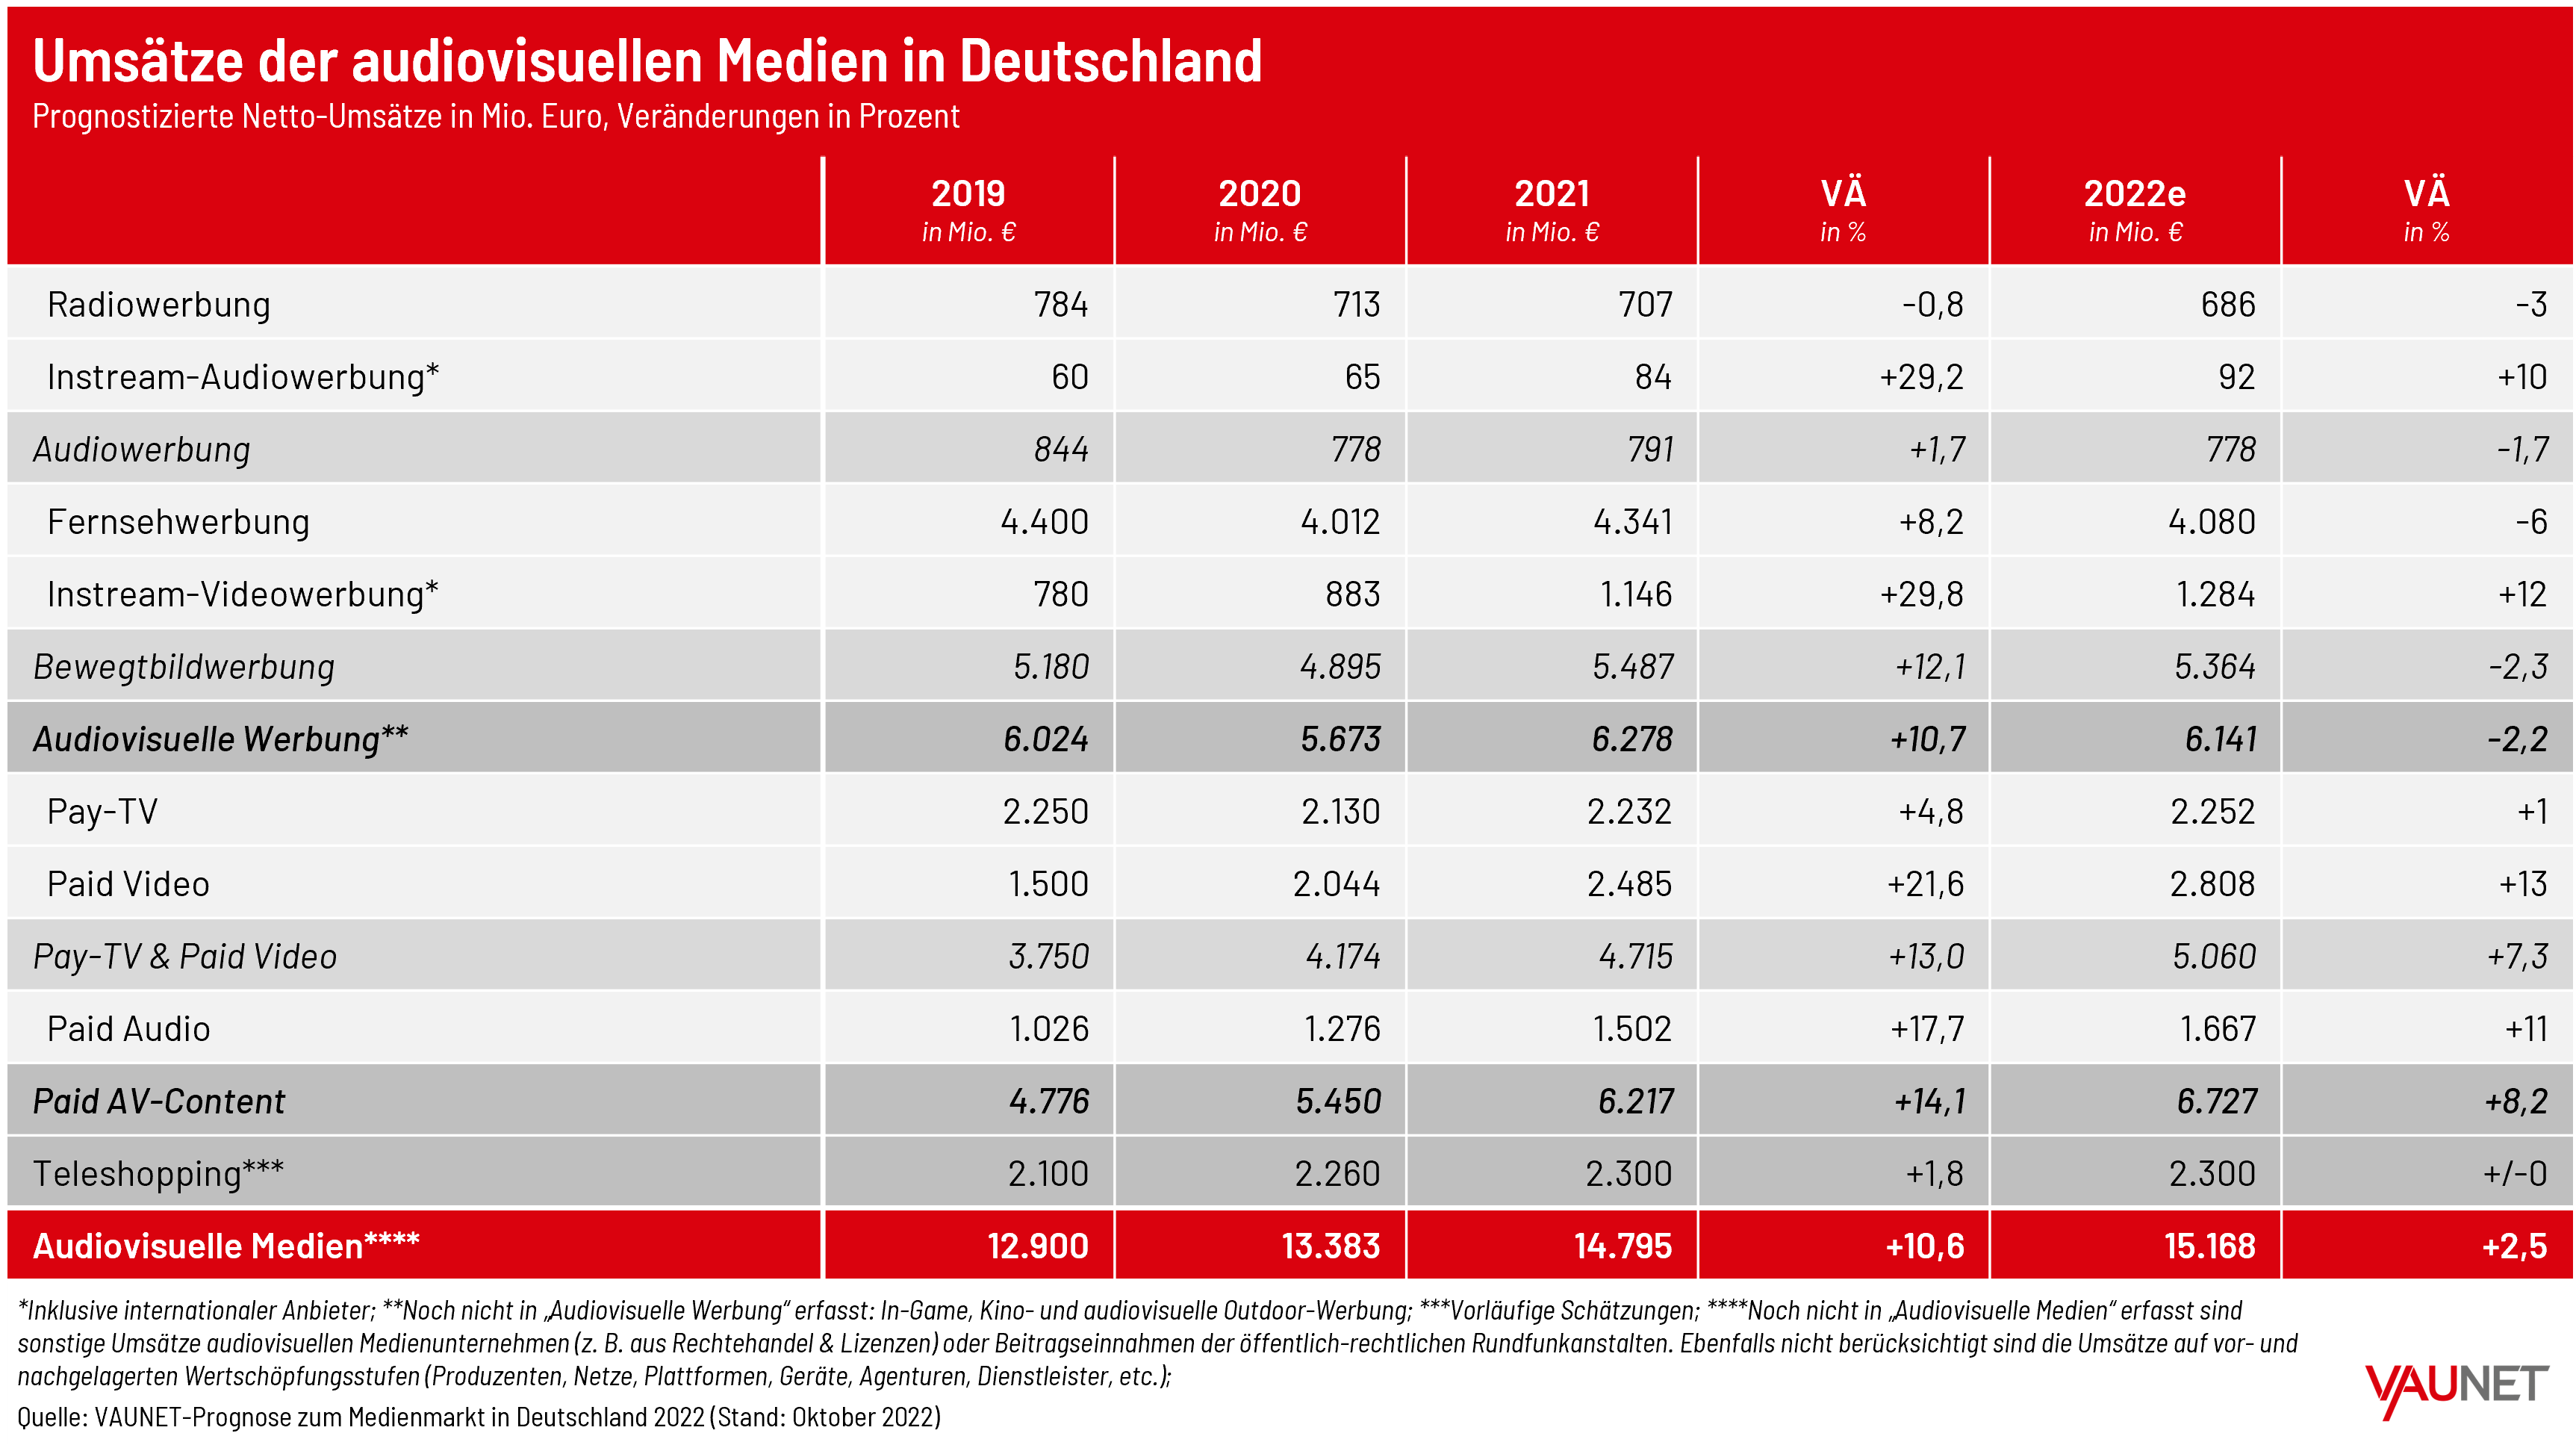 Grafik_VAUNET-Herbstprognose2022_Umsätze-AV-Medien-in-Deutschland_2019-2022 (Prognose)